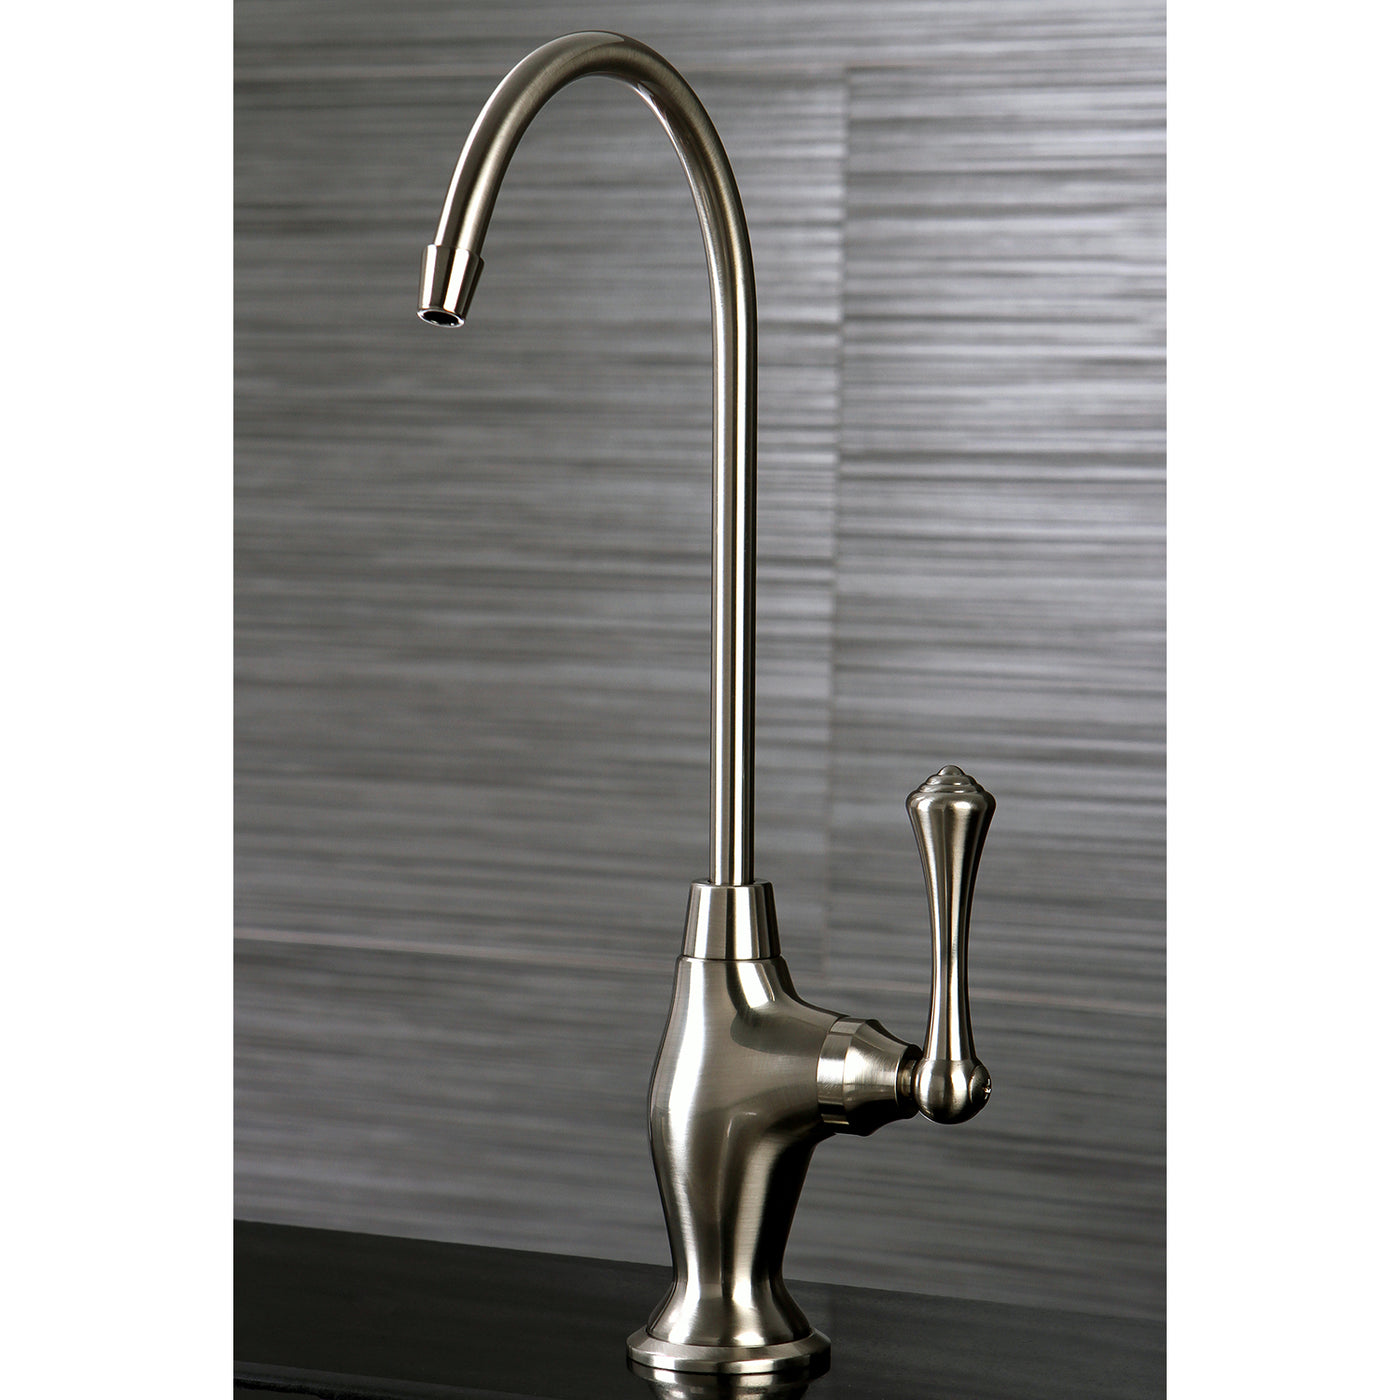 Elements of Design ES3198BL 1/4 Turn Water Filtration Faucet, Brushed Nickel